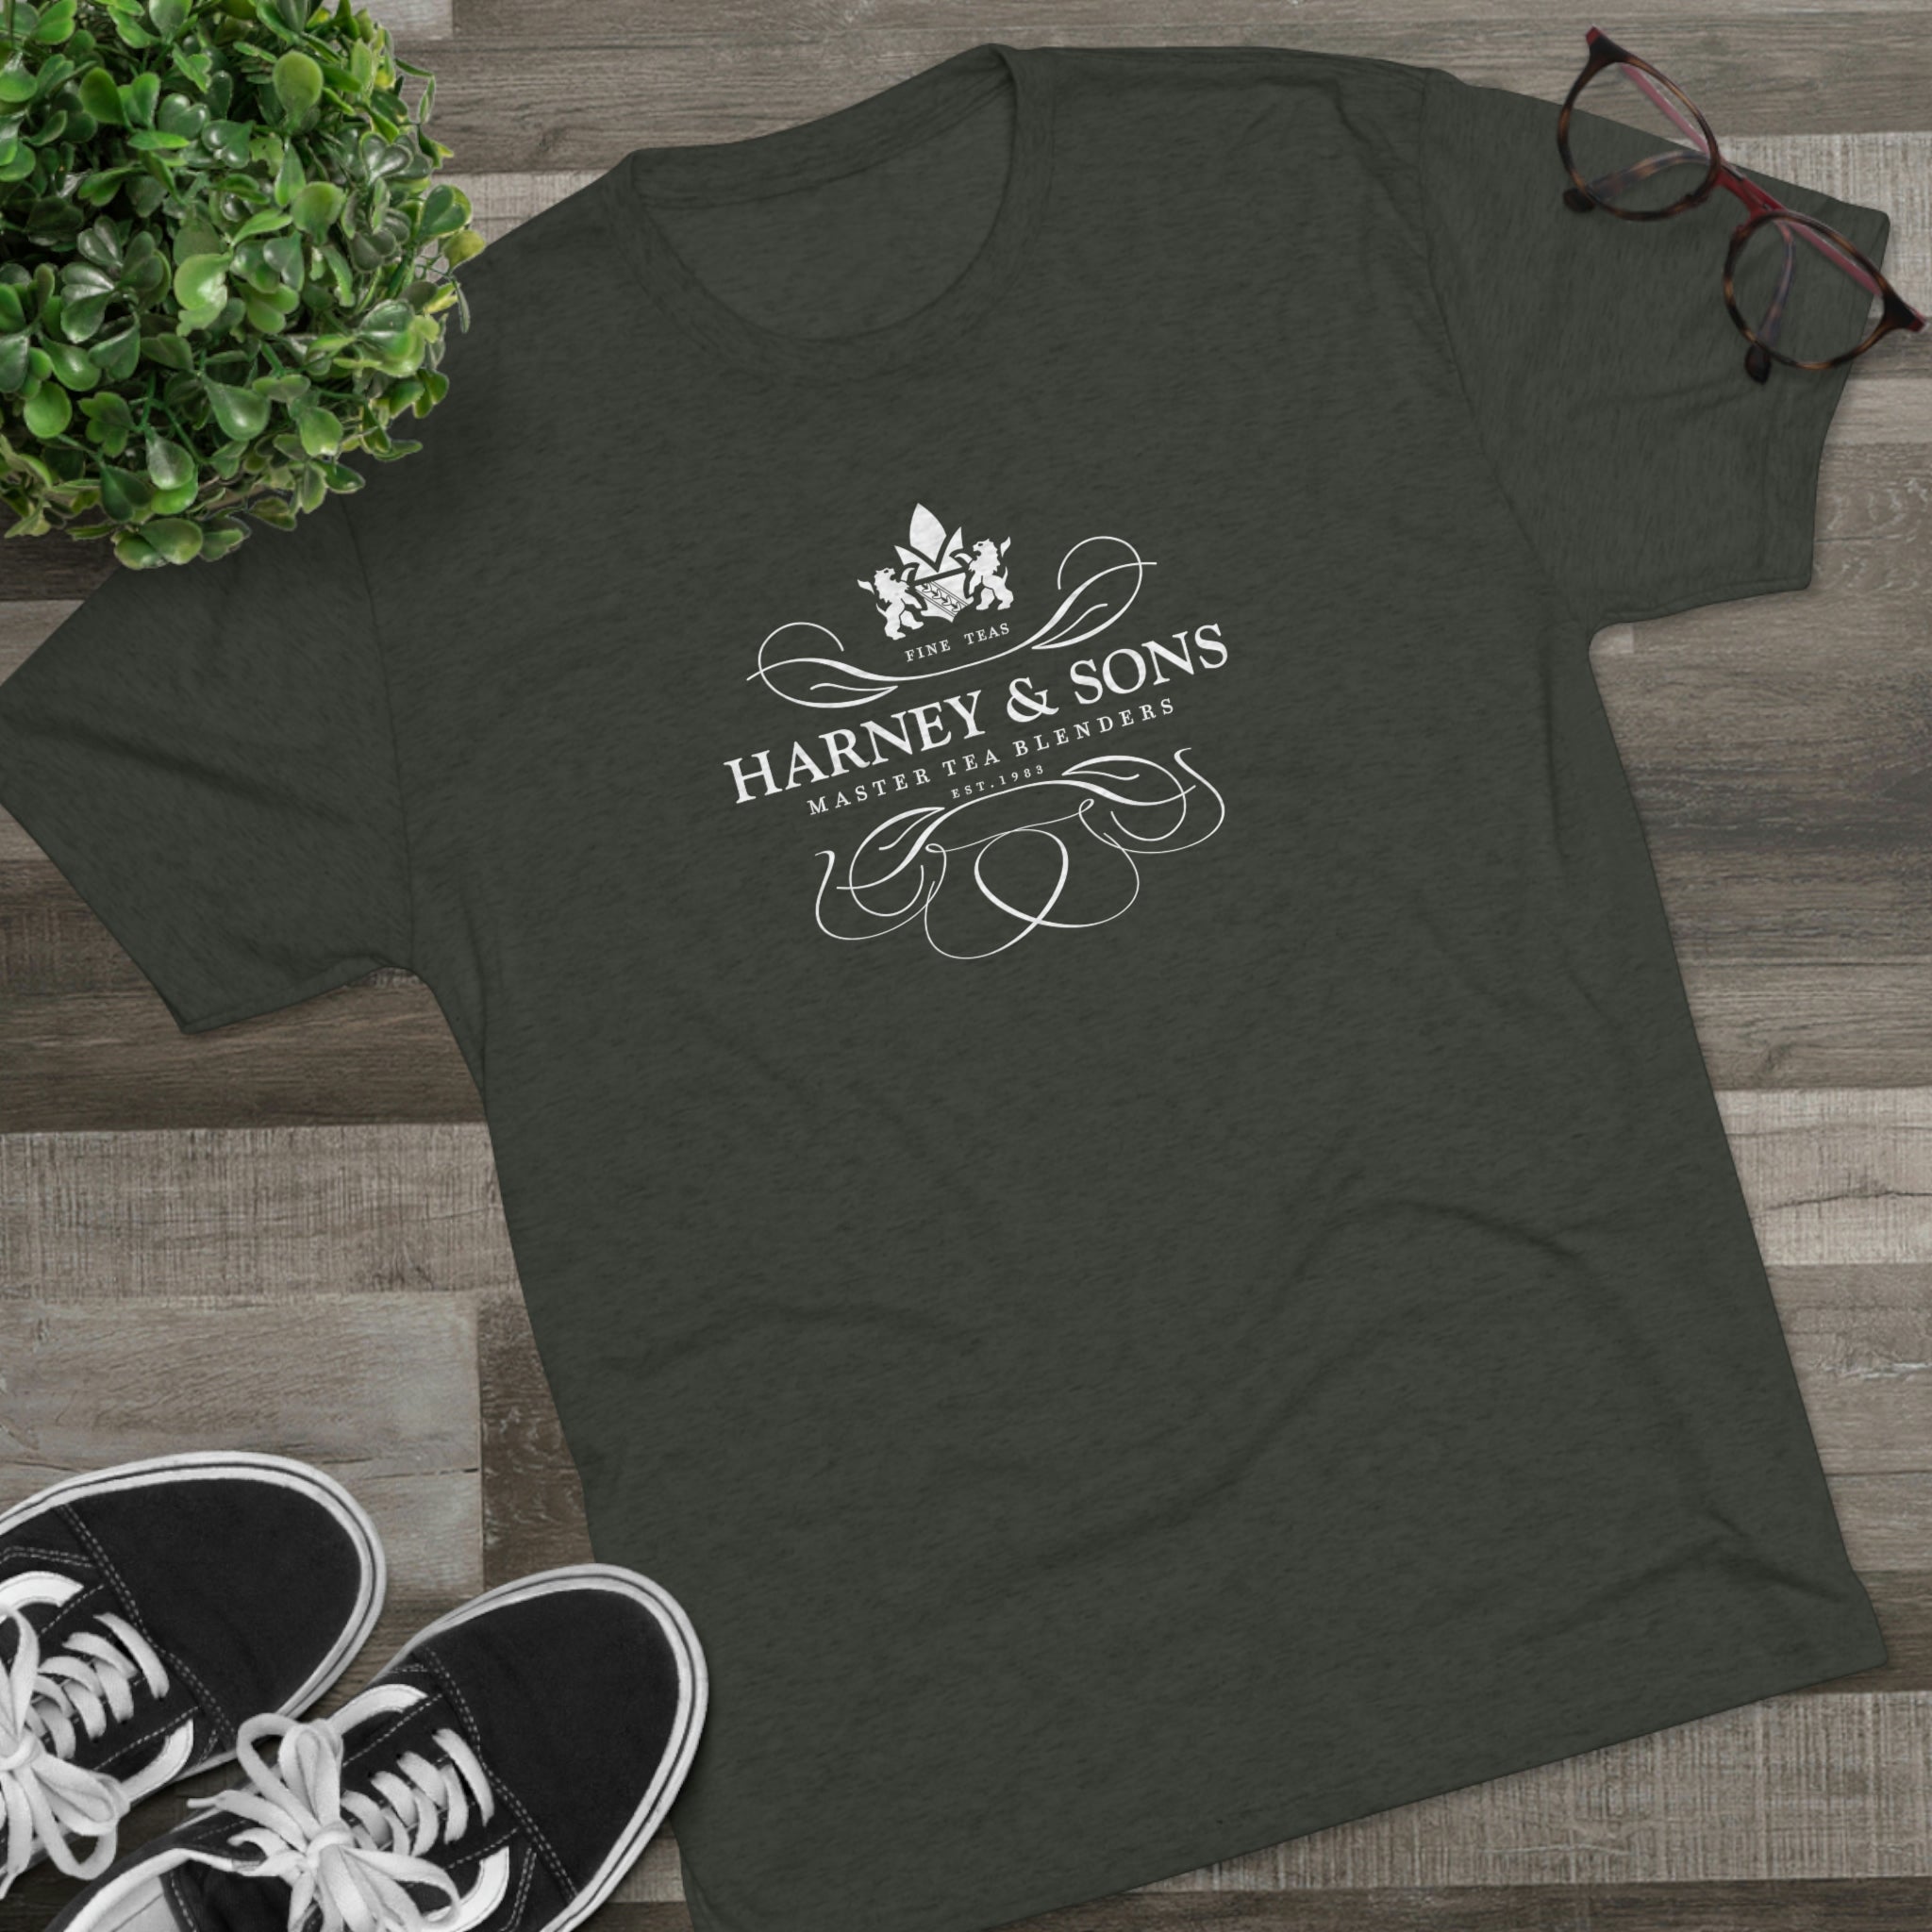 Harney & Sons Logo Graphic Tee -   - Harney & Sons Fine Teas